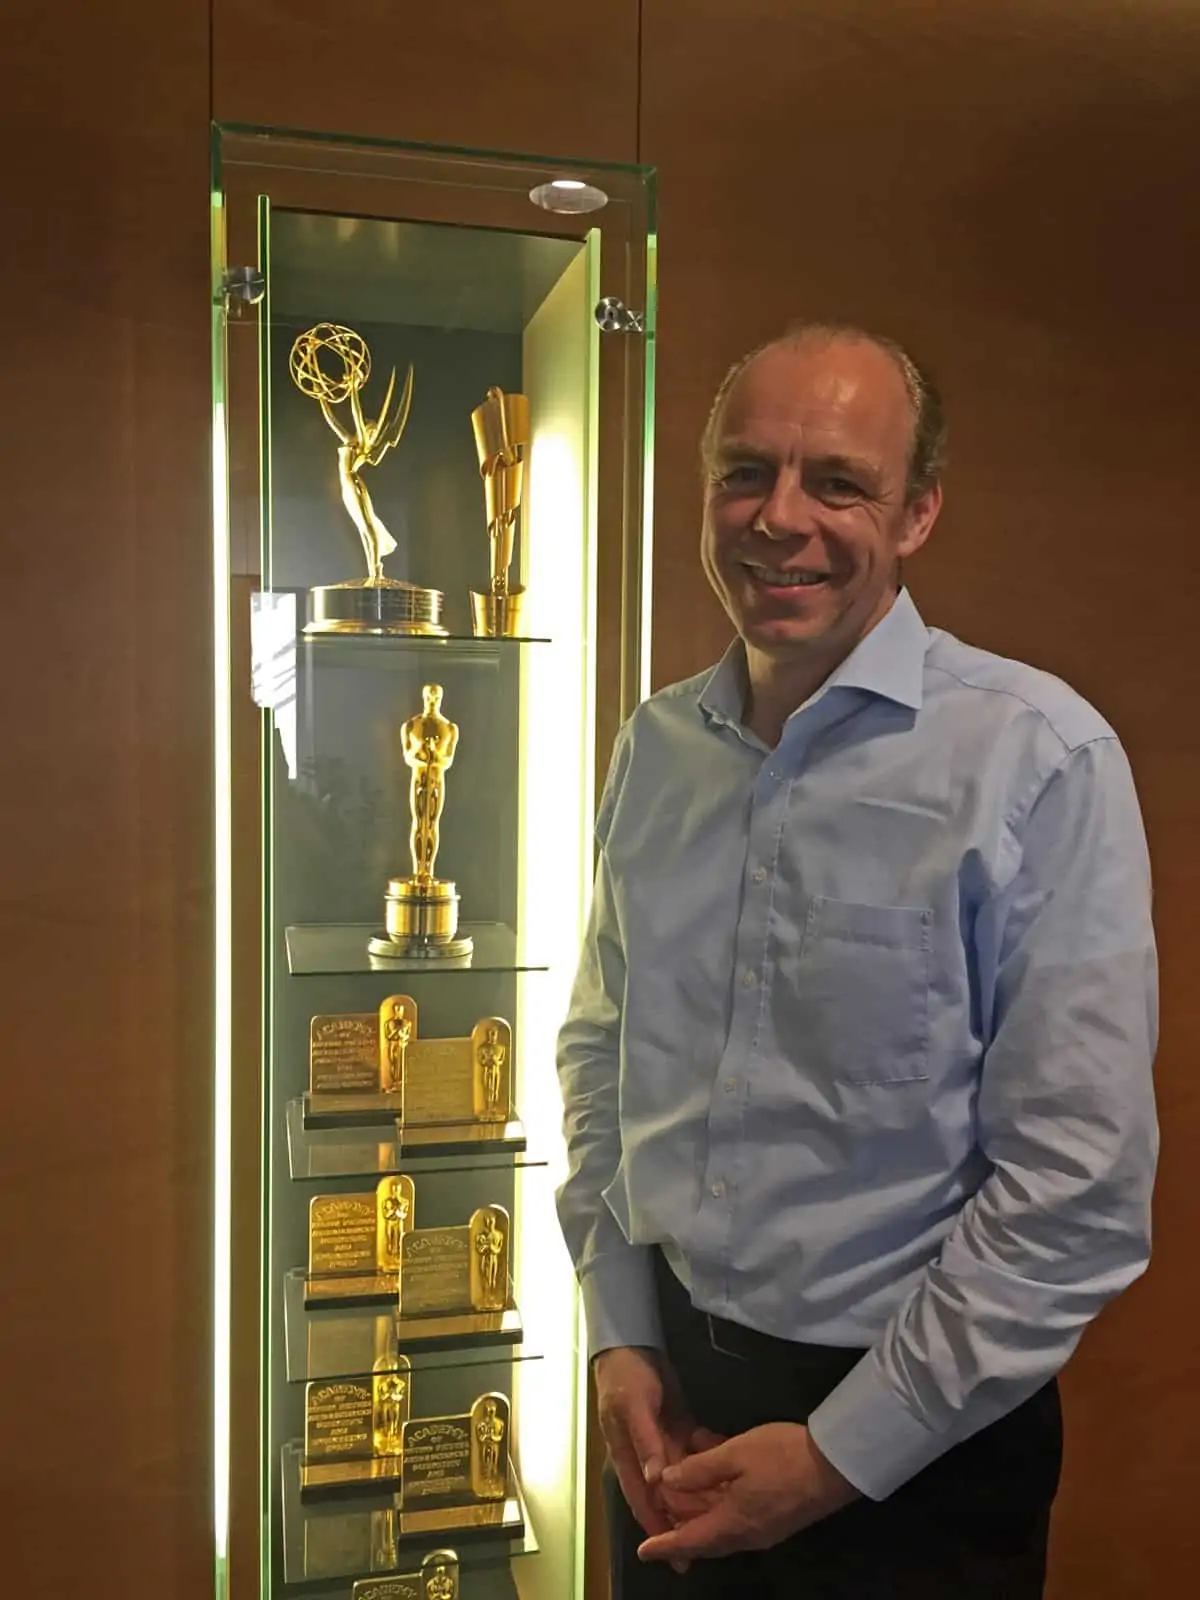 Stephan Schenk beside the ARRI trophy cabinet